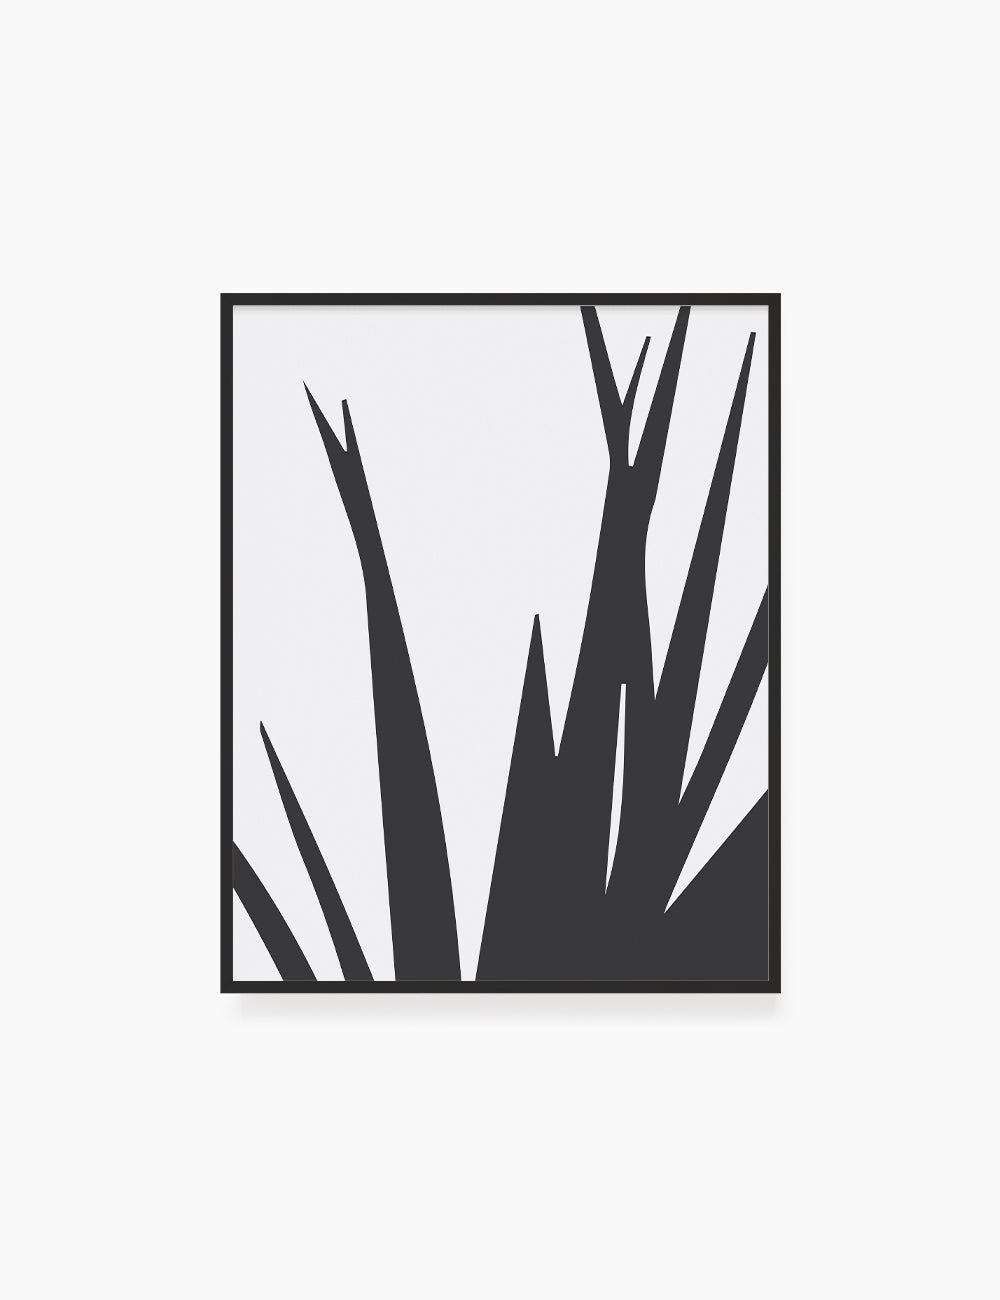 LEAVES. GRASS. MINIMALIST BOTANICAL BOHO ART. BLACK AND WHITE. Minimal Aesthetic. Clean Design. Printable Wall Art Illustration. - PAPER MOON Art & Design